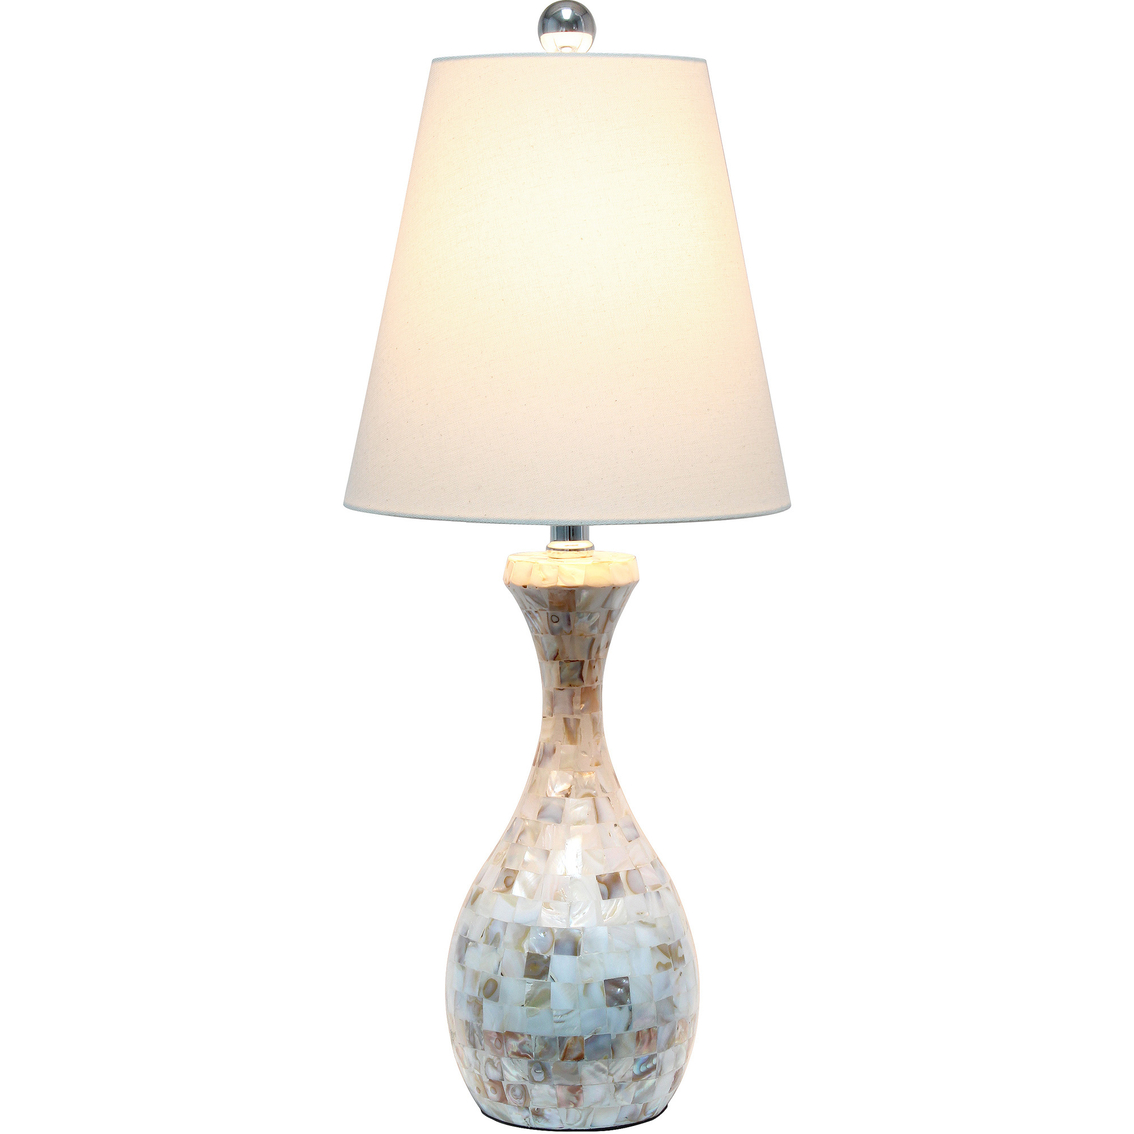 Lalia Home Malibu Curved Mosaic Seashell Table Lamp - Image 2 of 7